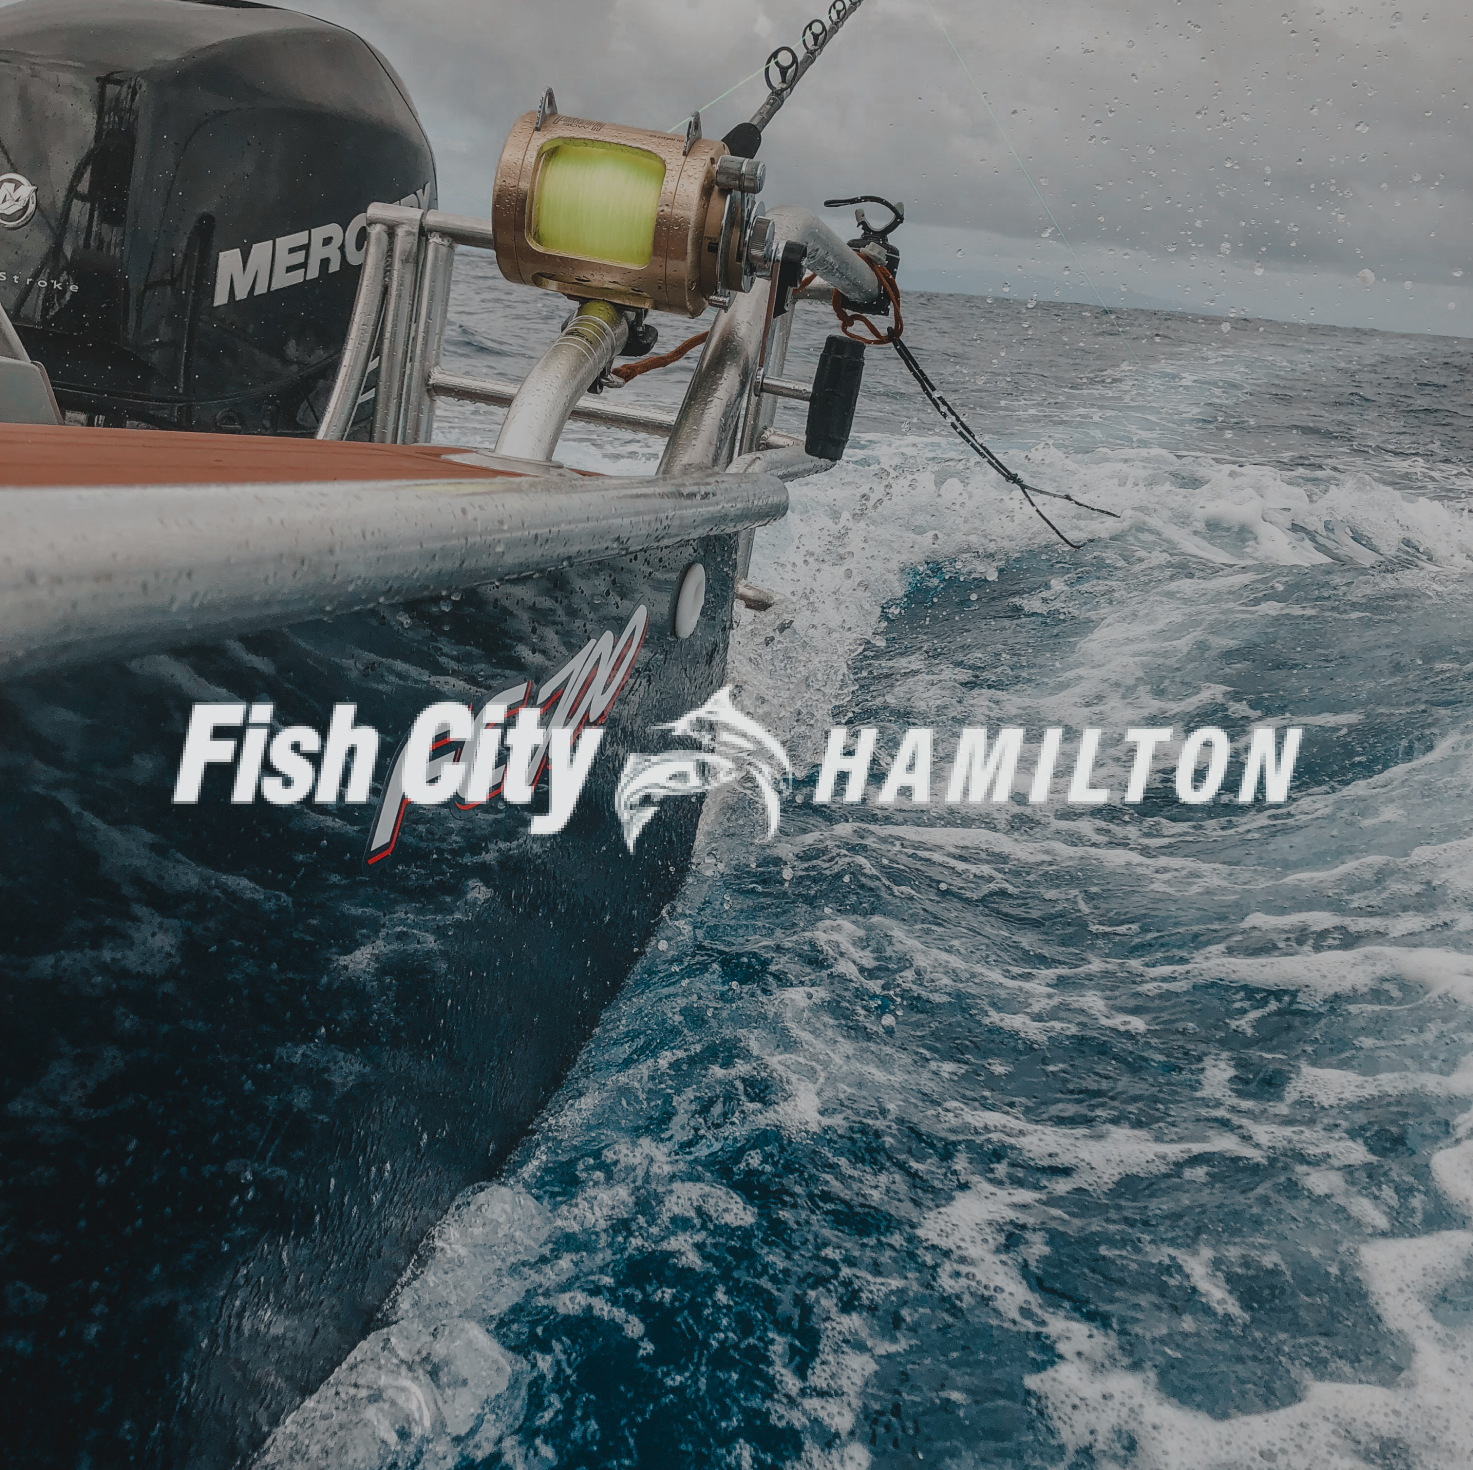 Fish City Hamilton Online Fishing Shop Logo and Background